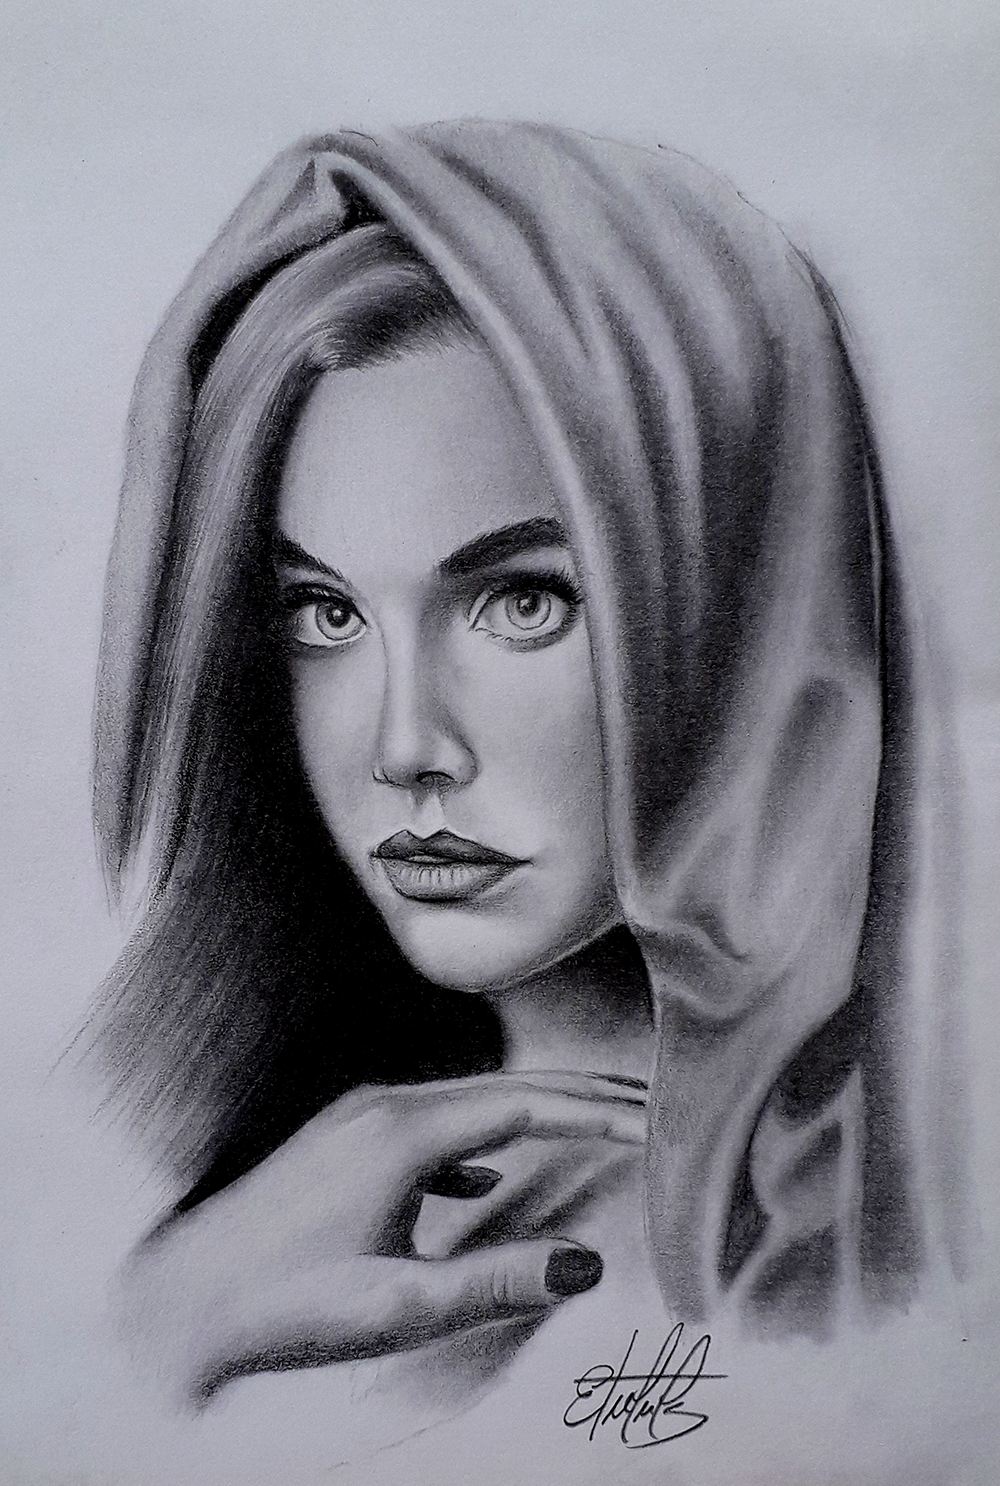 Face of a beautiful woman. Drawing created with graphite pencil Rostro  de una hermosa mujer. Dibujo creado con lápiz de grafito.